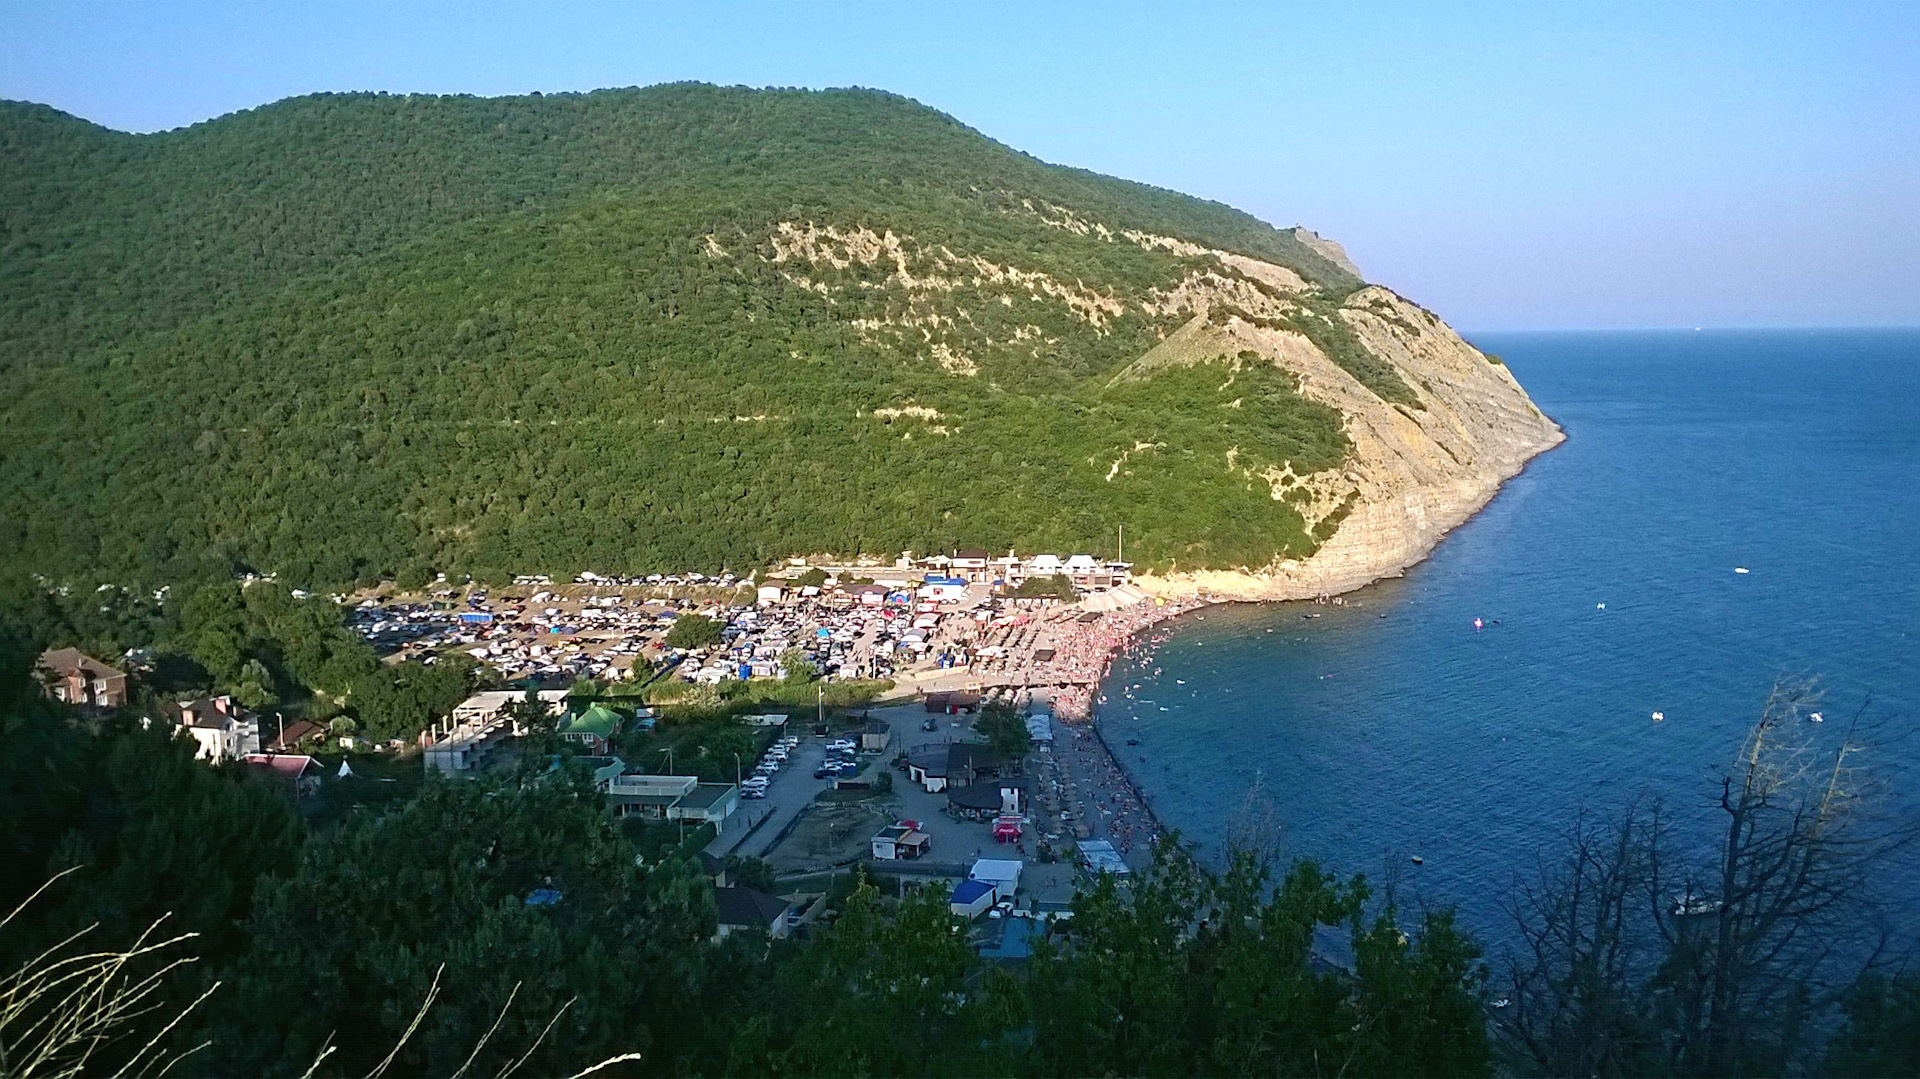 Абрау дюрсо фото поселка и пляжа